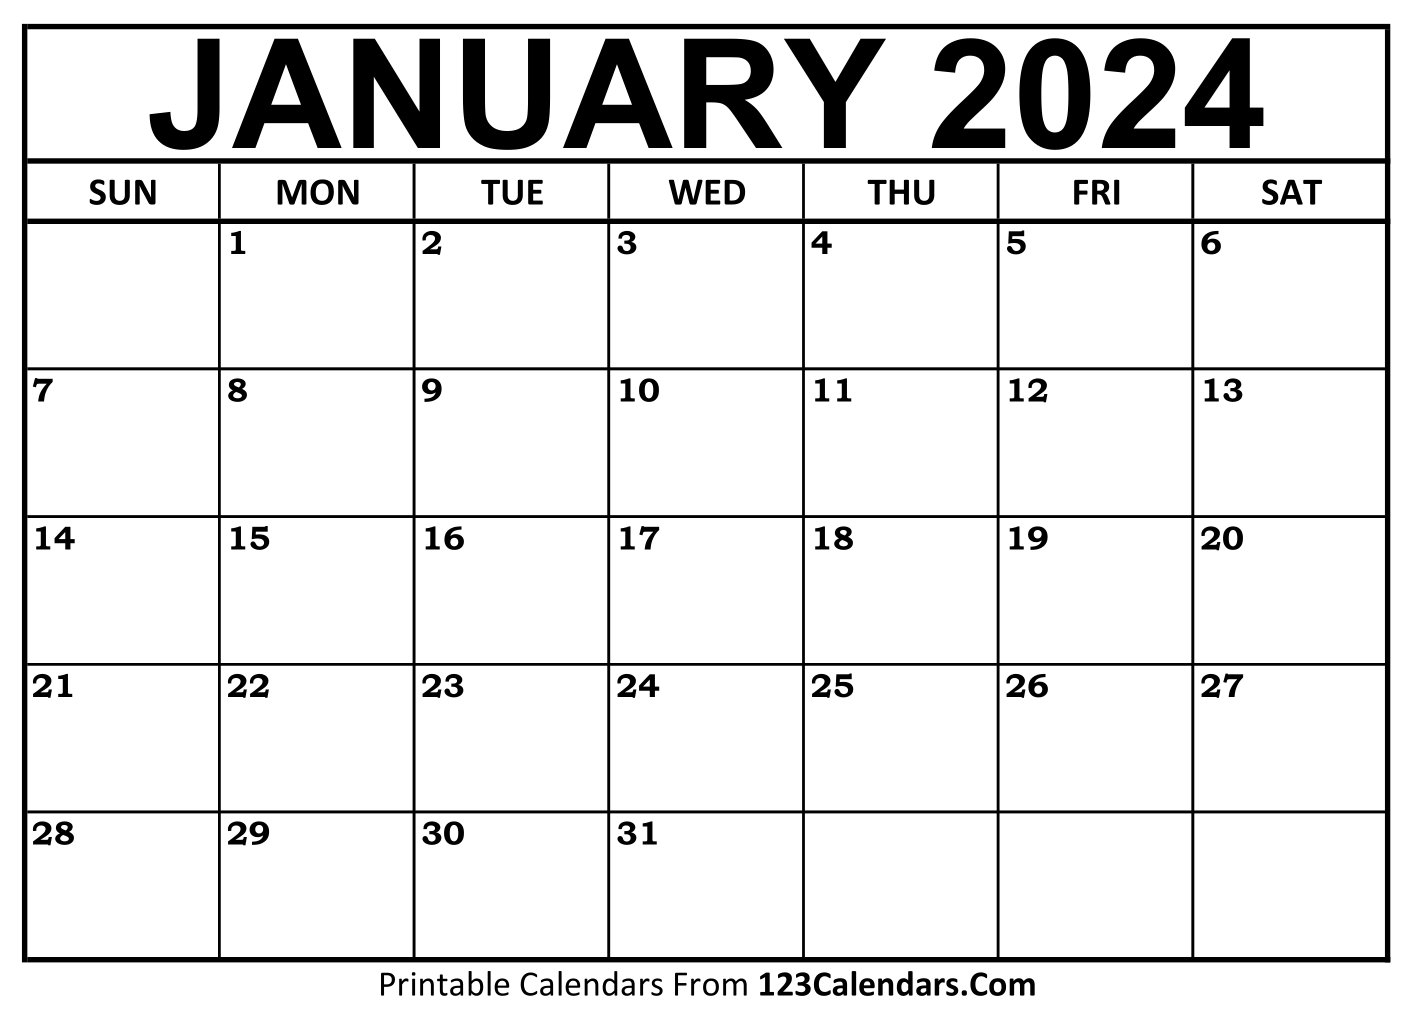 Printable January 2024 Calendar Templates - 123Calendars for Blank Calendar Printable January 2024